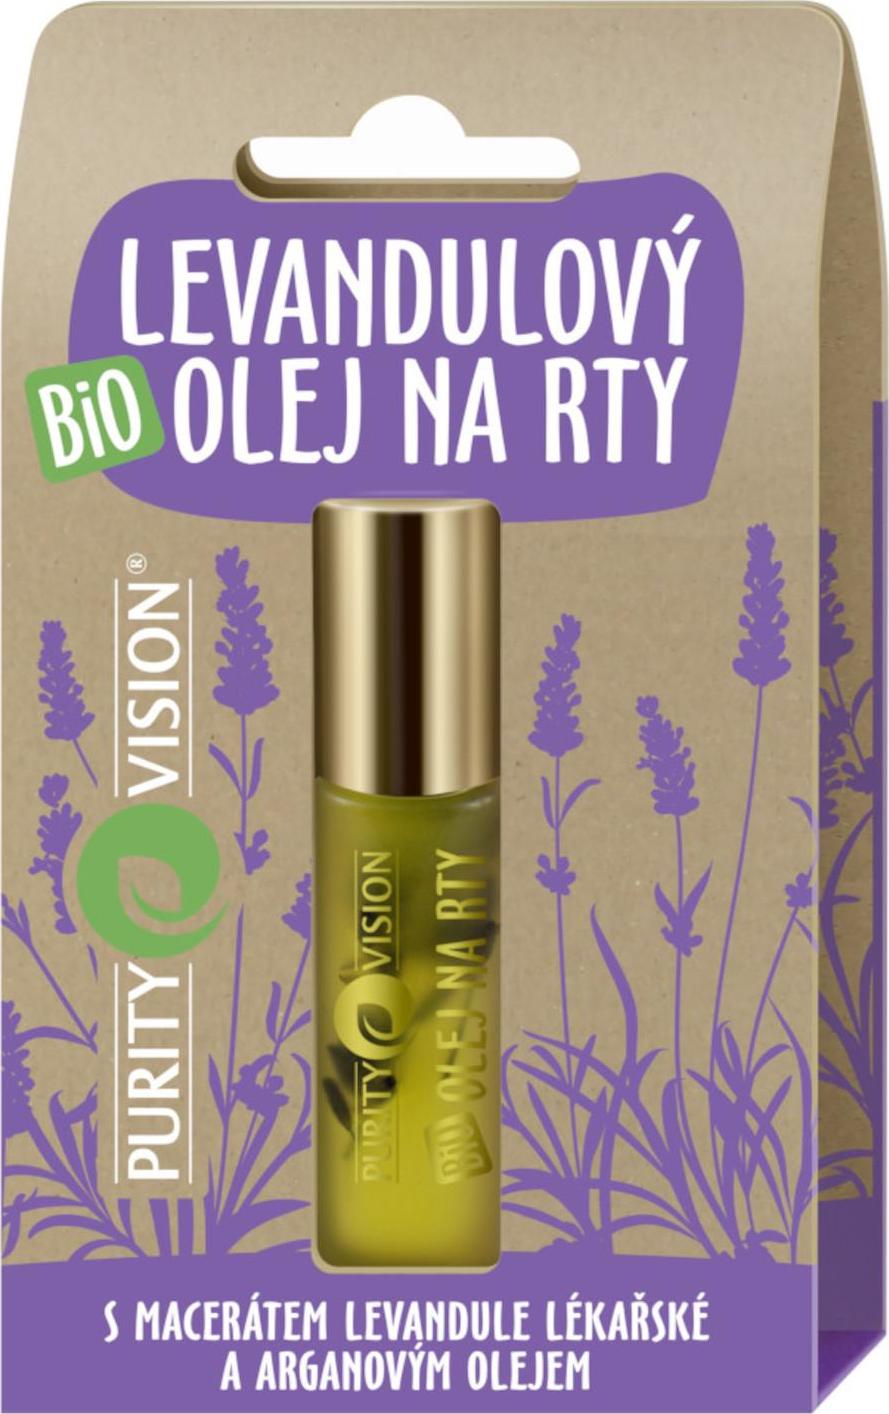 Purity Vision Bio Levandulový olej na rty 10 ml